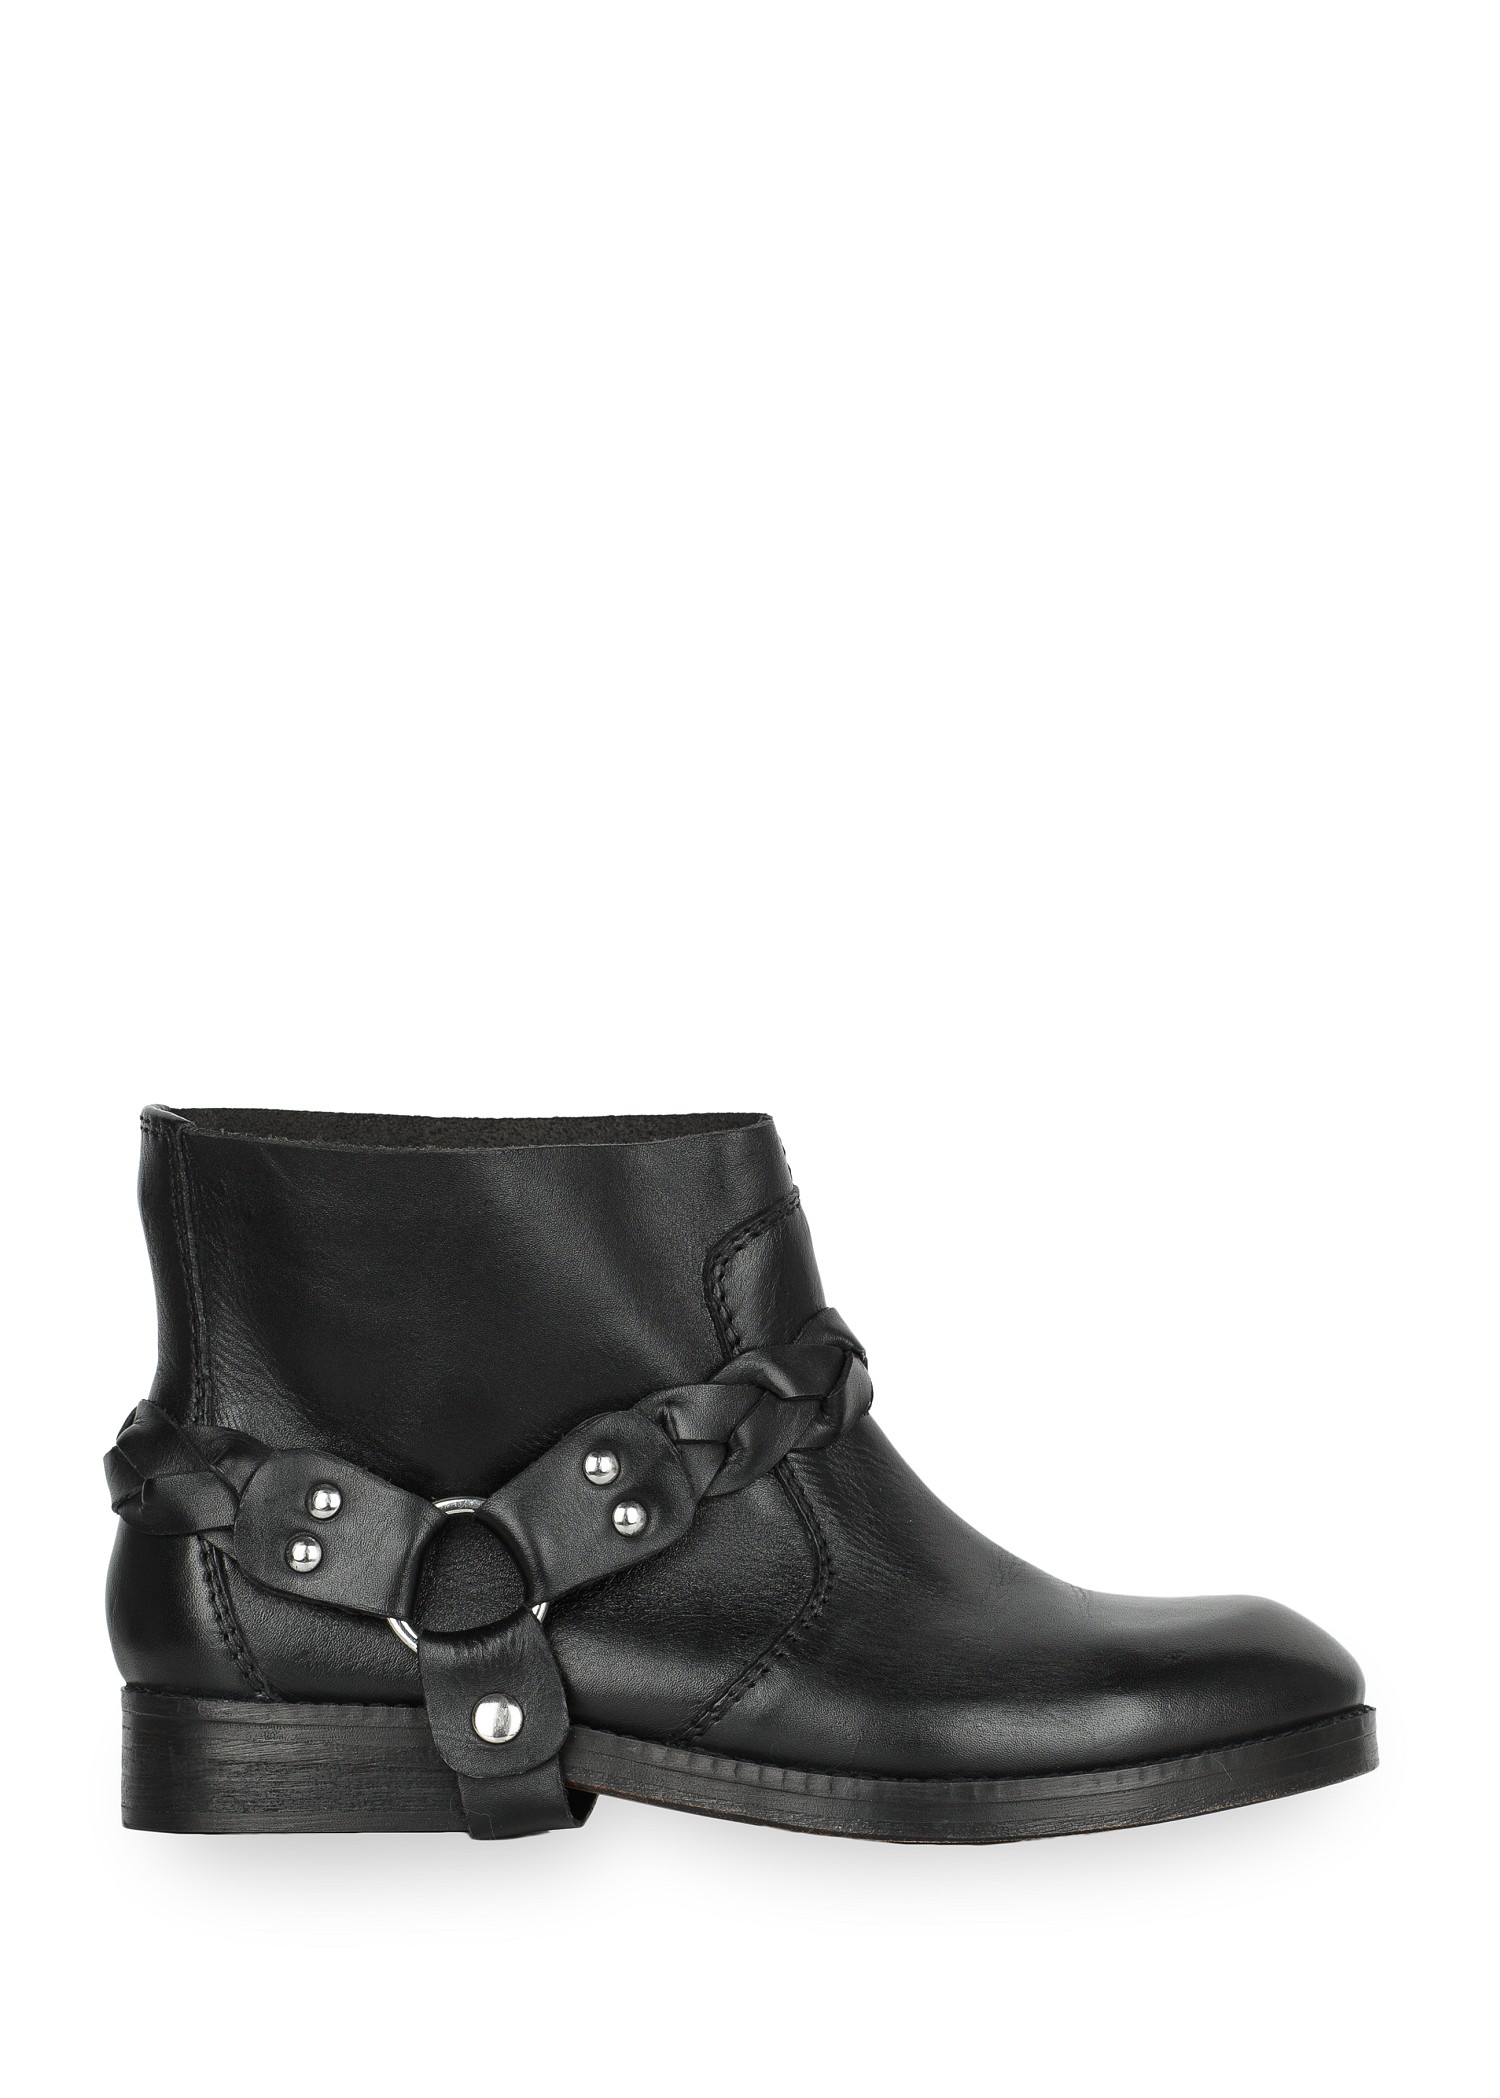 Lyst - Mango Biker Leather Ankle Boot in Black